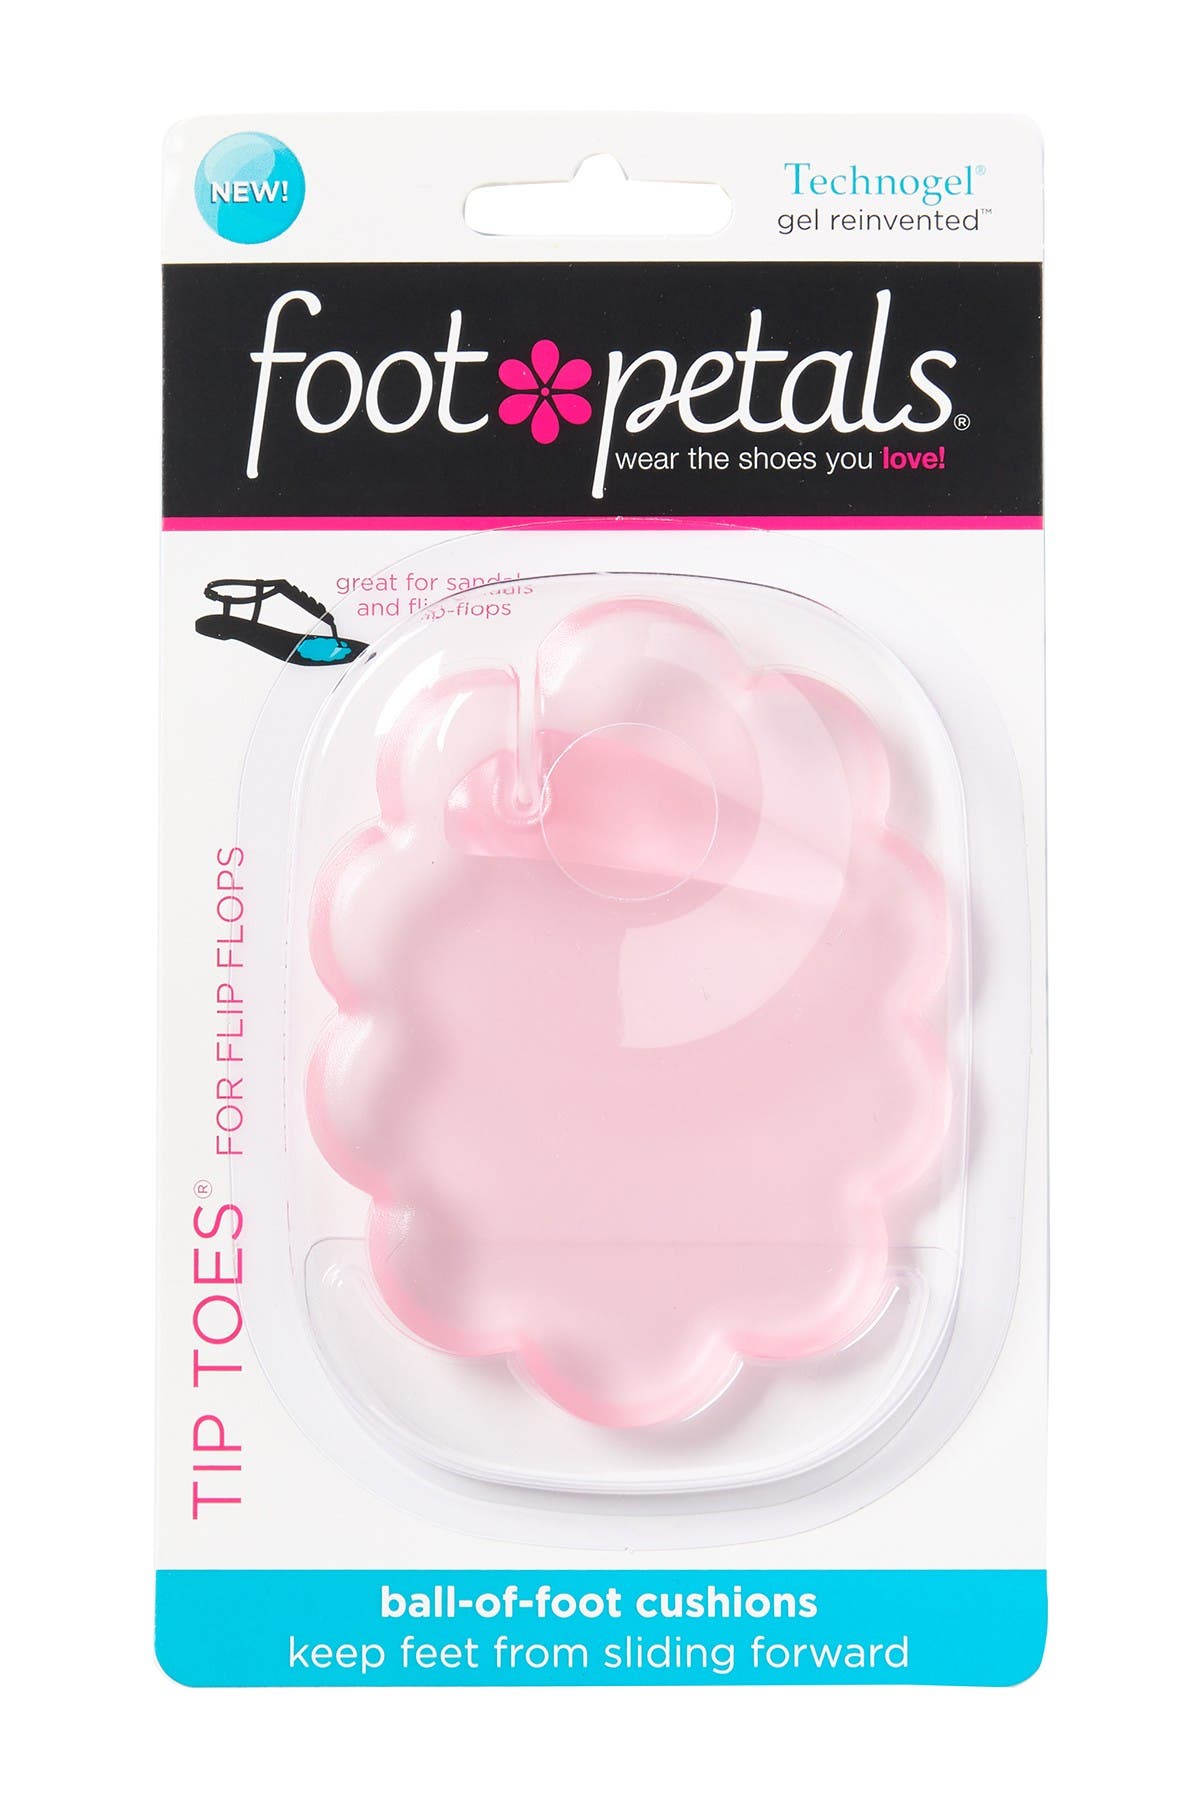 Foot Petals Technogel Tip Toes for Flip Flops /& Sandals